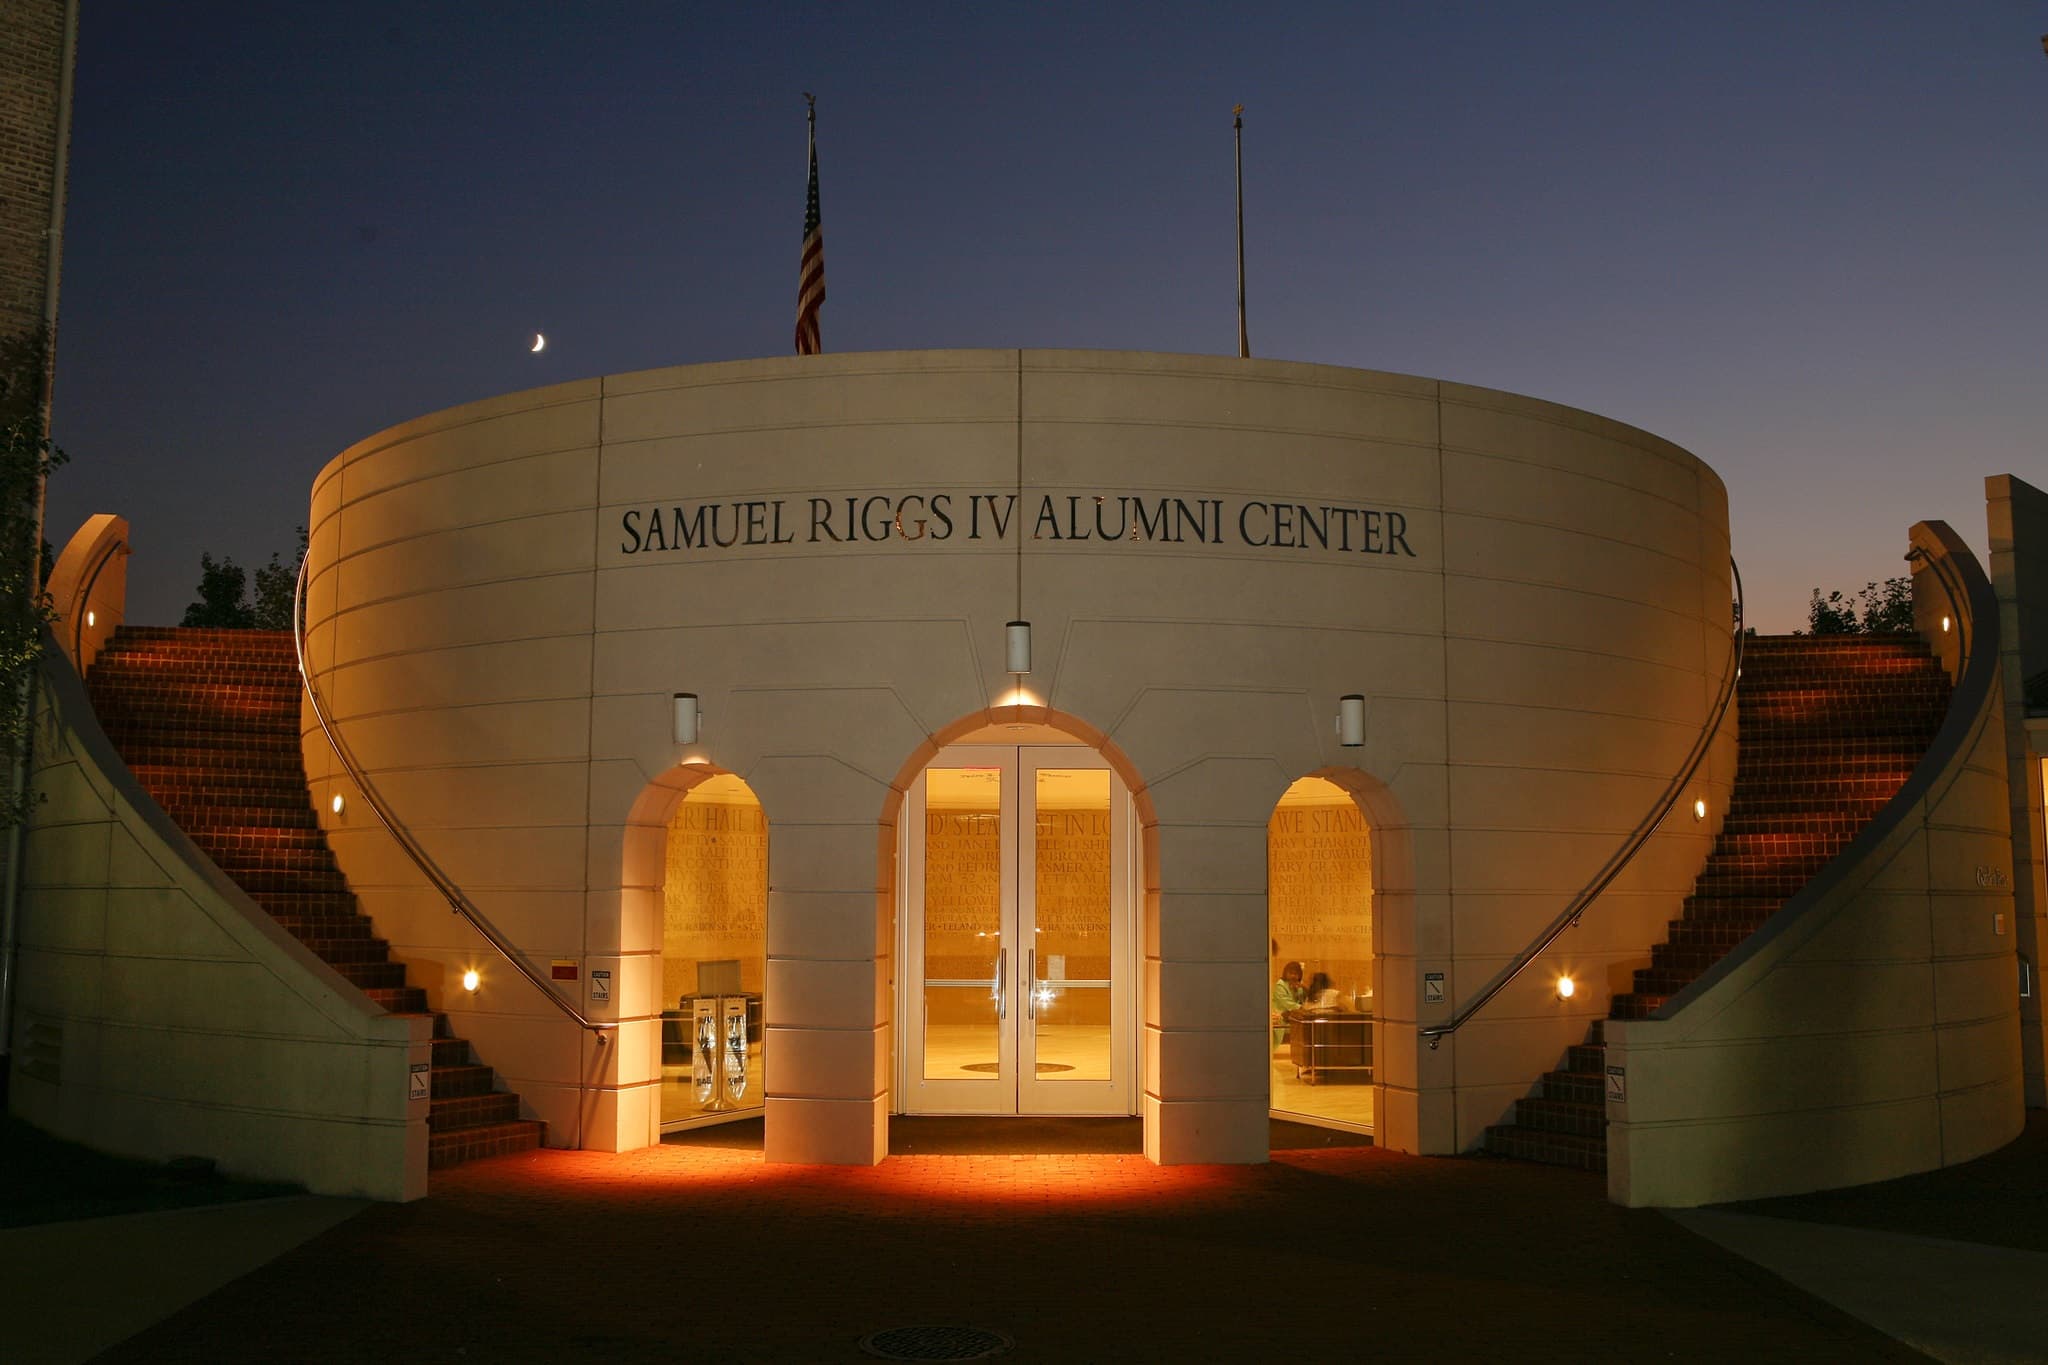 The Samuel Riggs IV Alumni Center at night